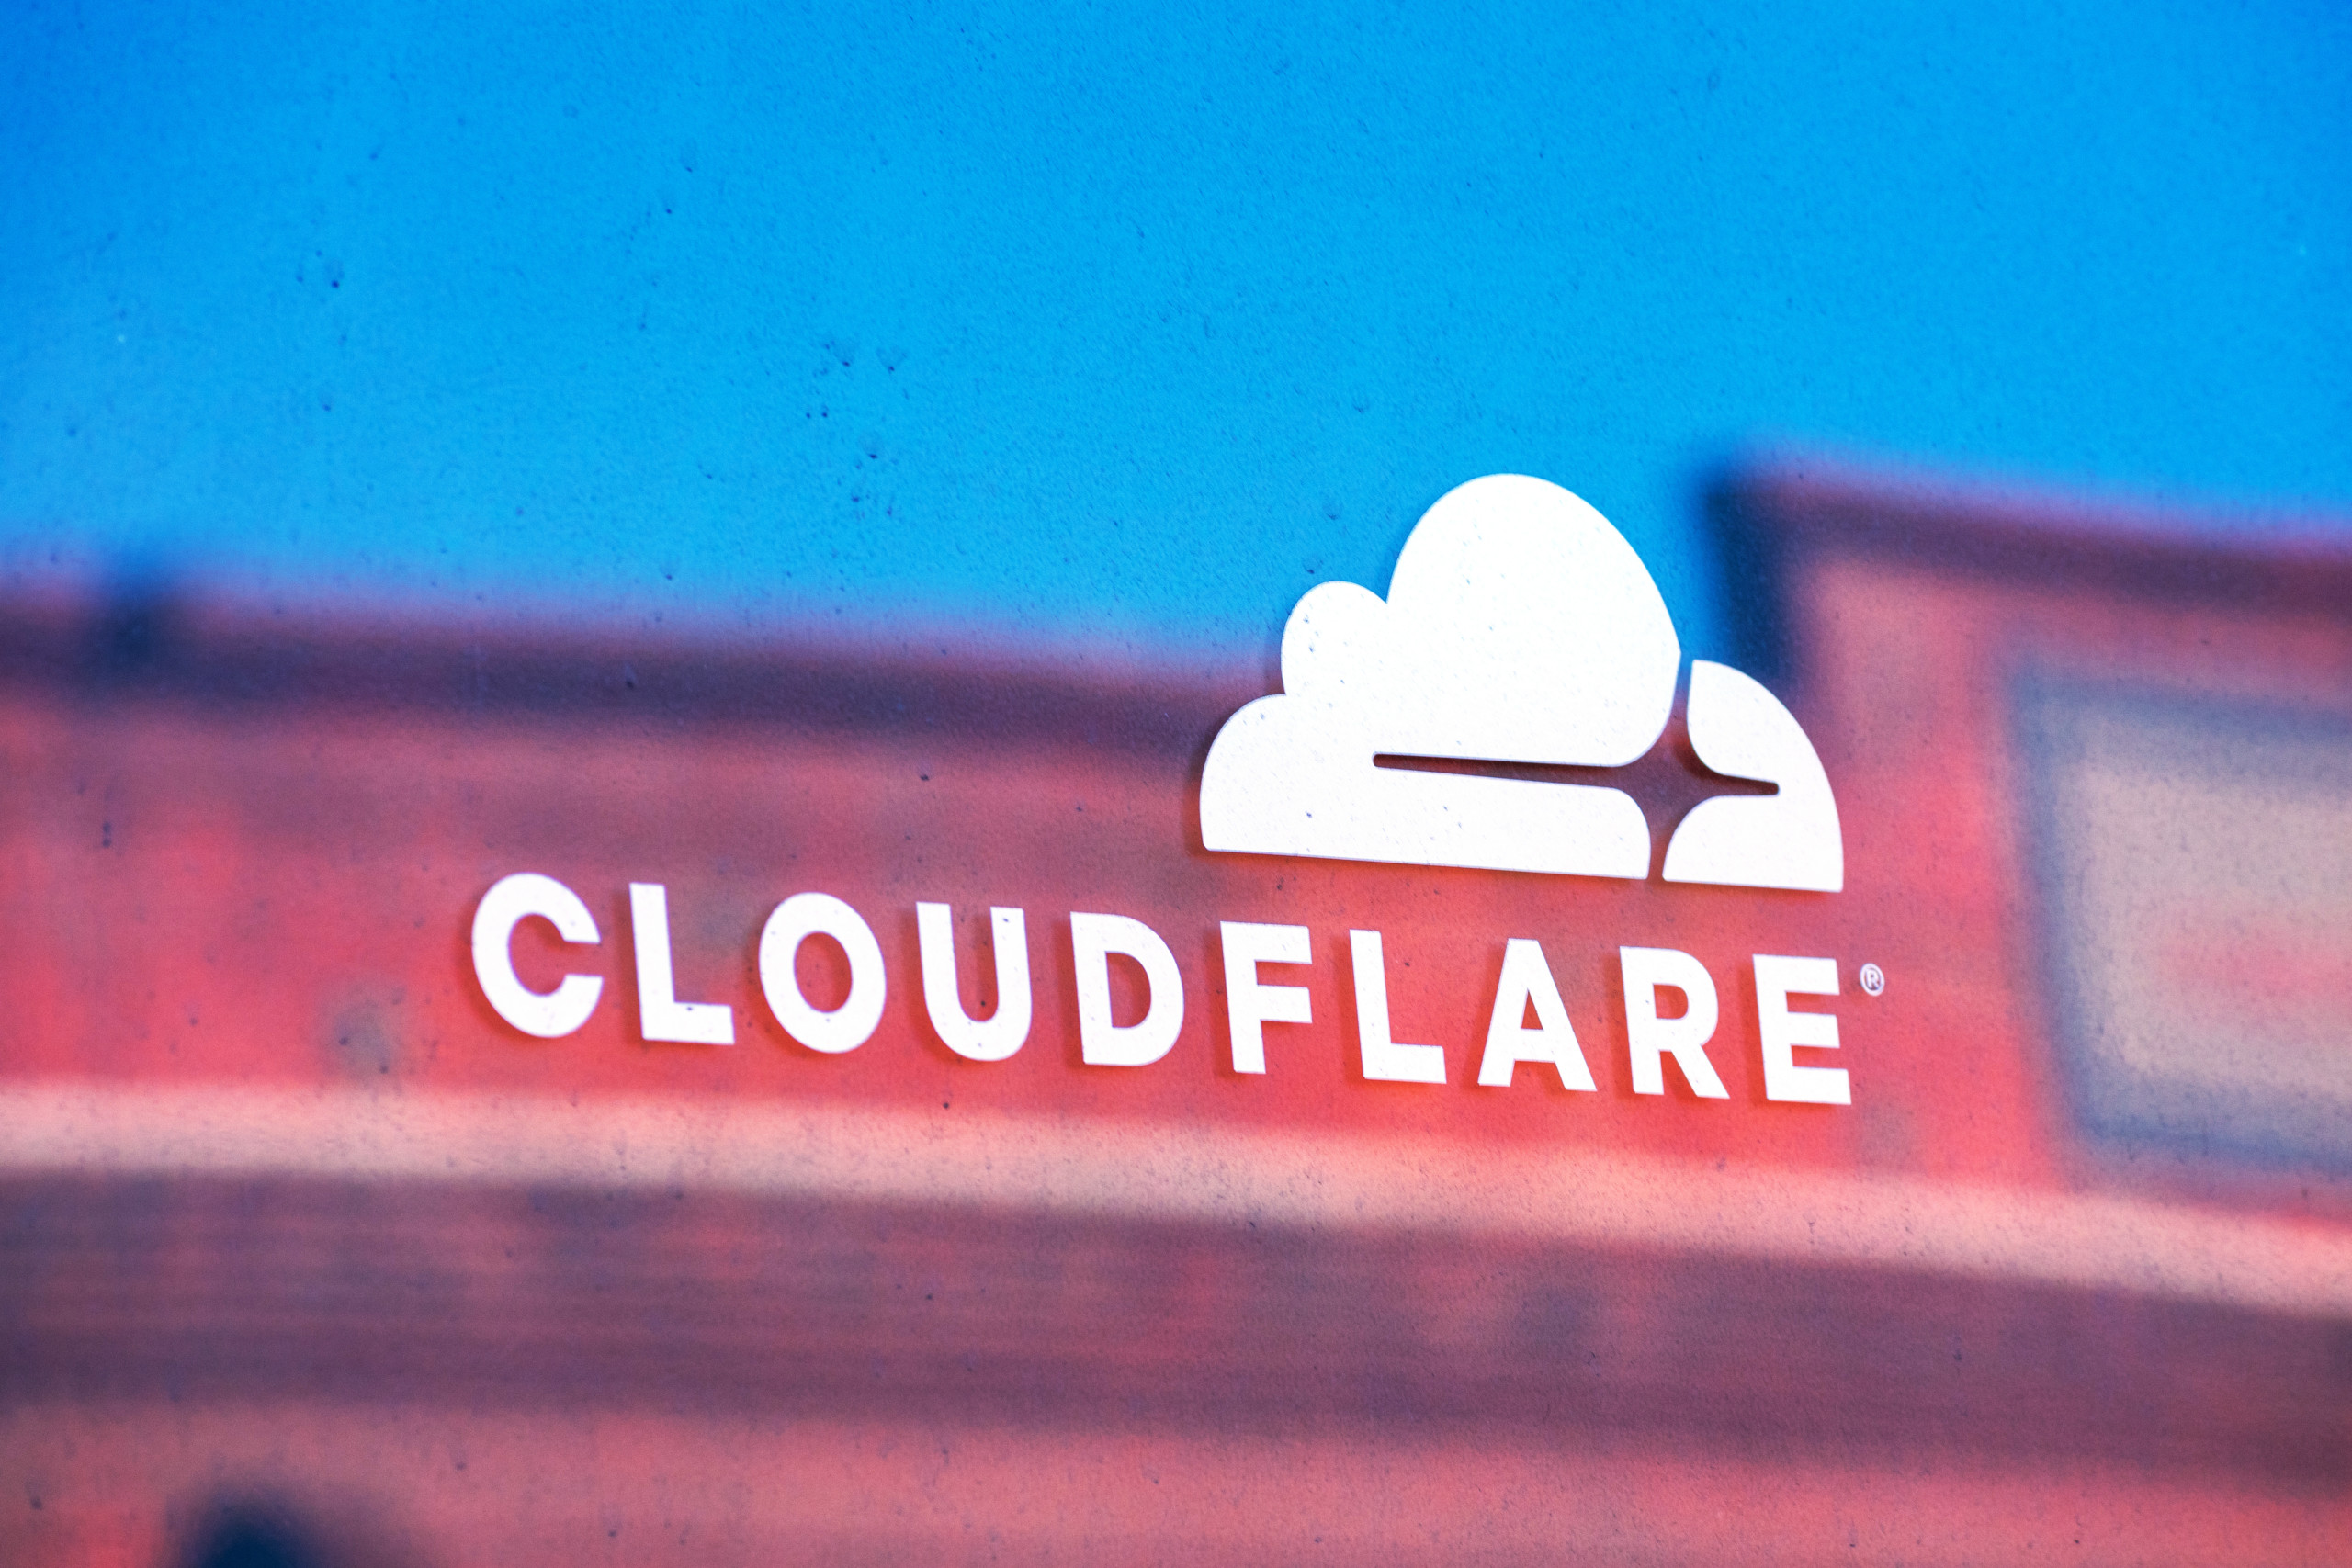 Cloudflare: Neue KI-Initiative 'Workers AI' und positives Oppenheimer-Rating treiben Aktienkurs